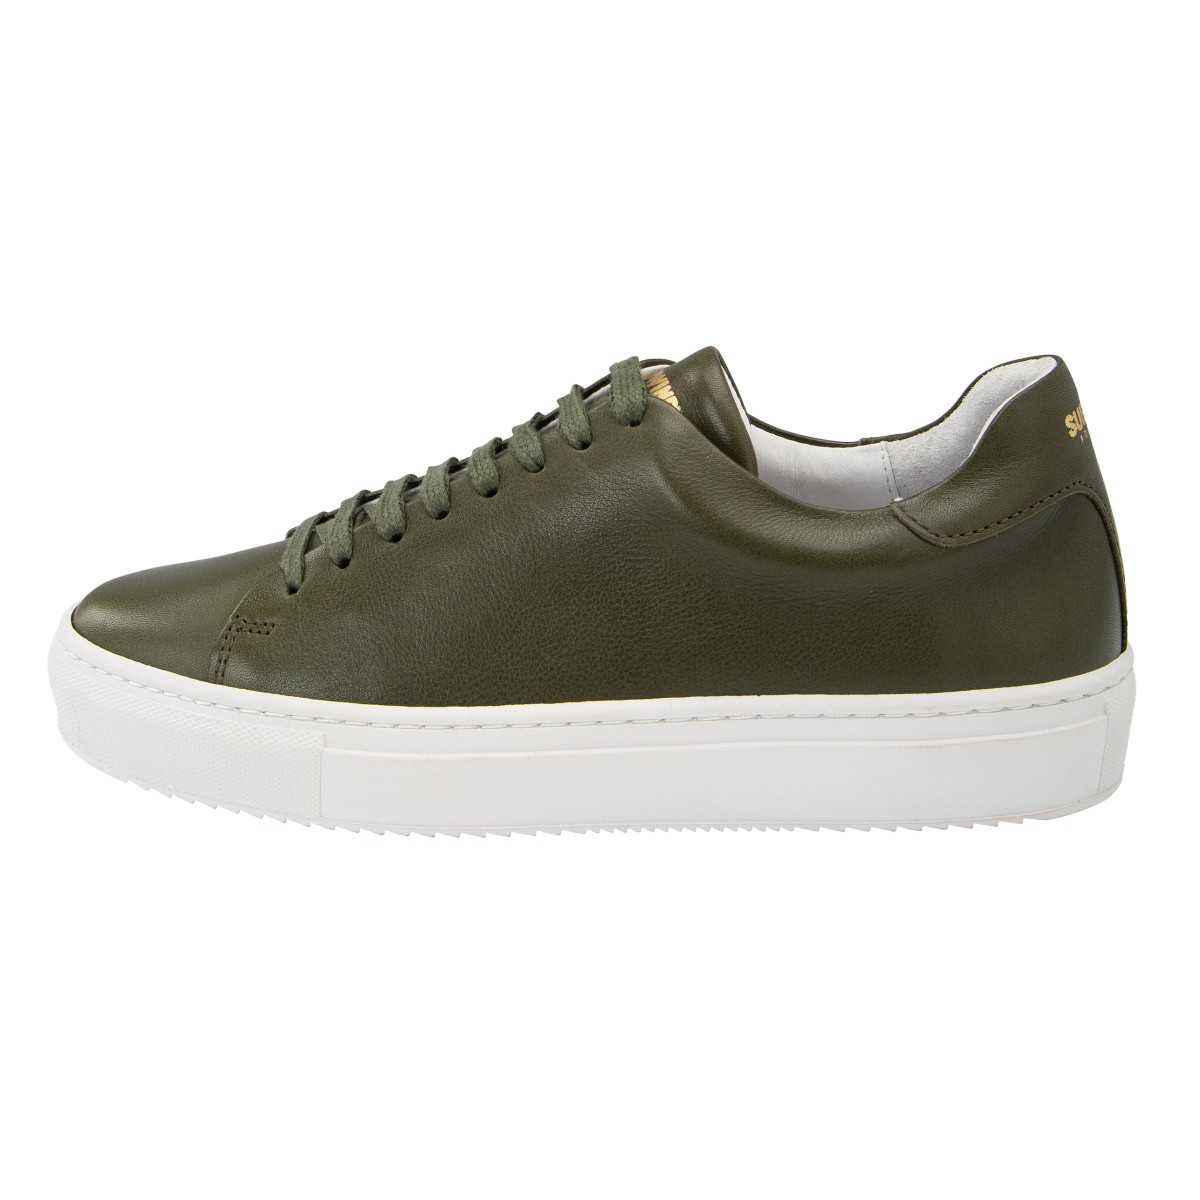 Suedwind-Ashton-Leather-Leder-Sneaker-Schuhe-Boots-Green-Gruen-10170028-01_1280x1280